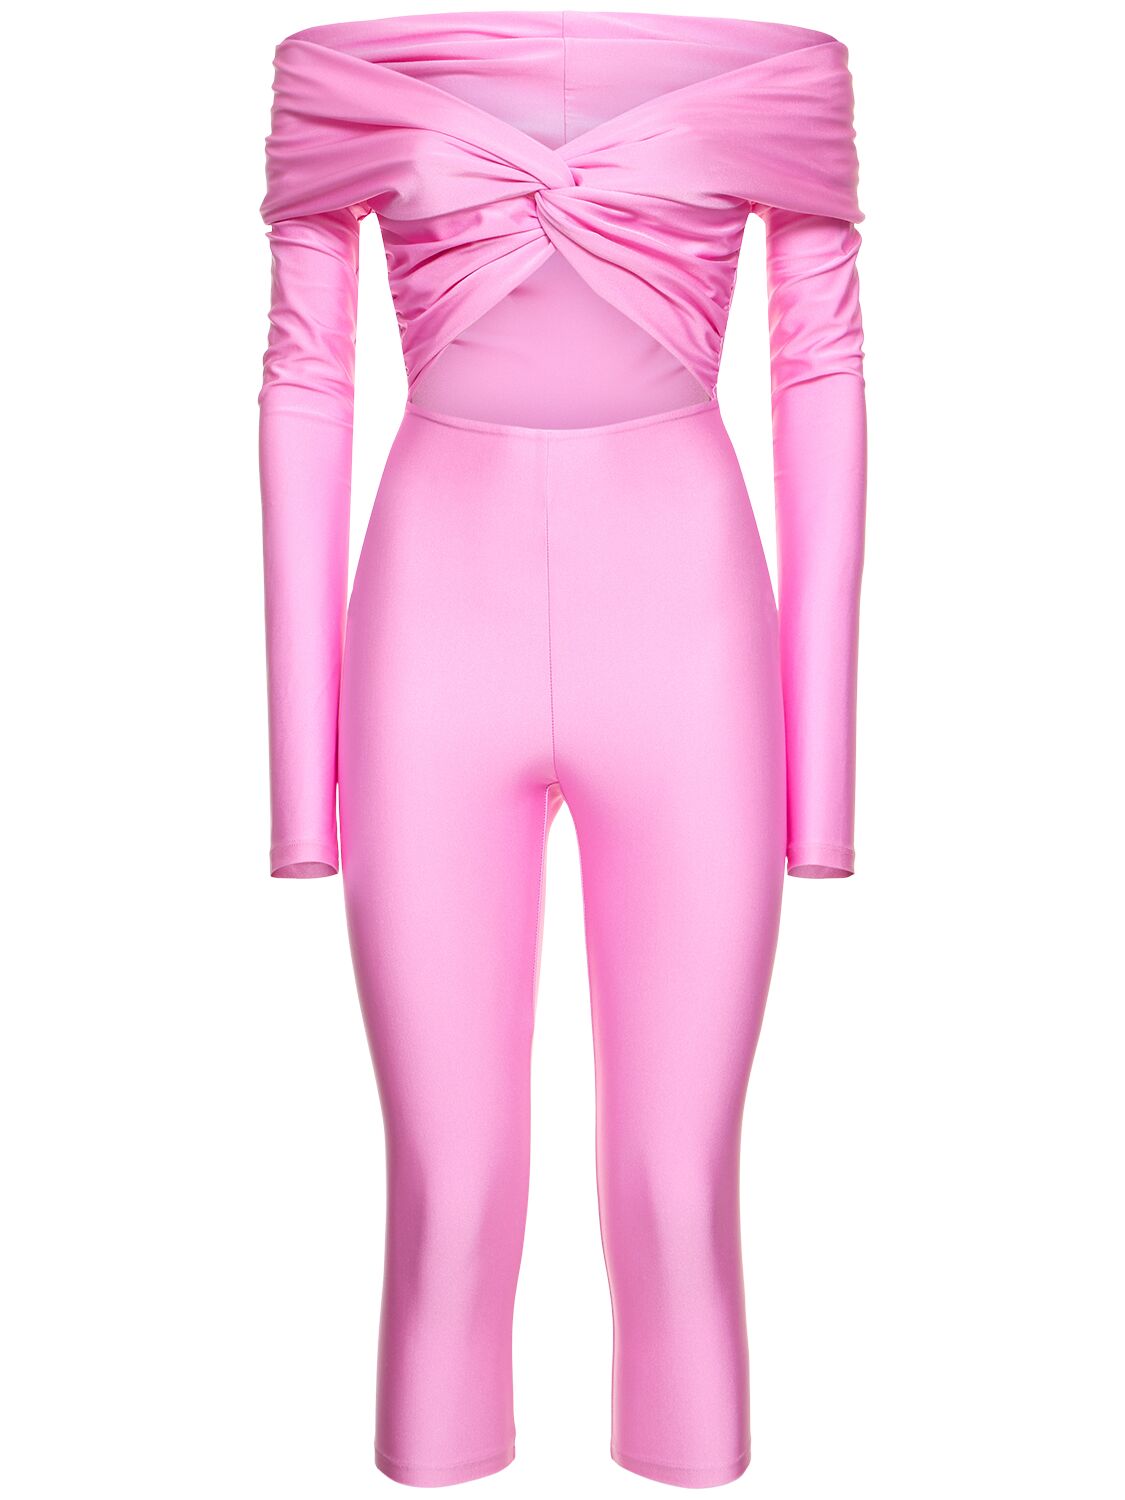 Kendall Shiny Lycra Long Sleeve Jumpsuit